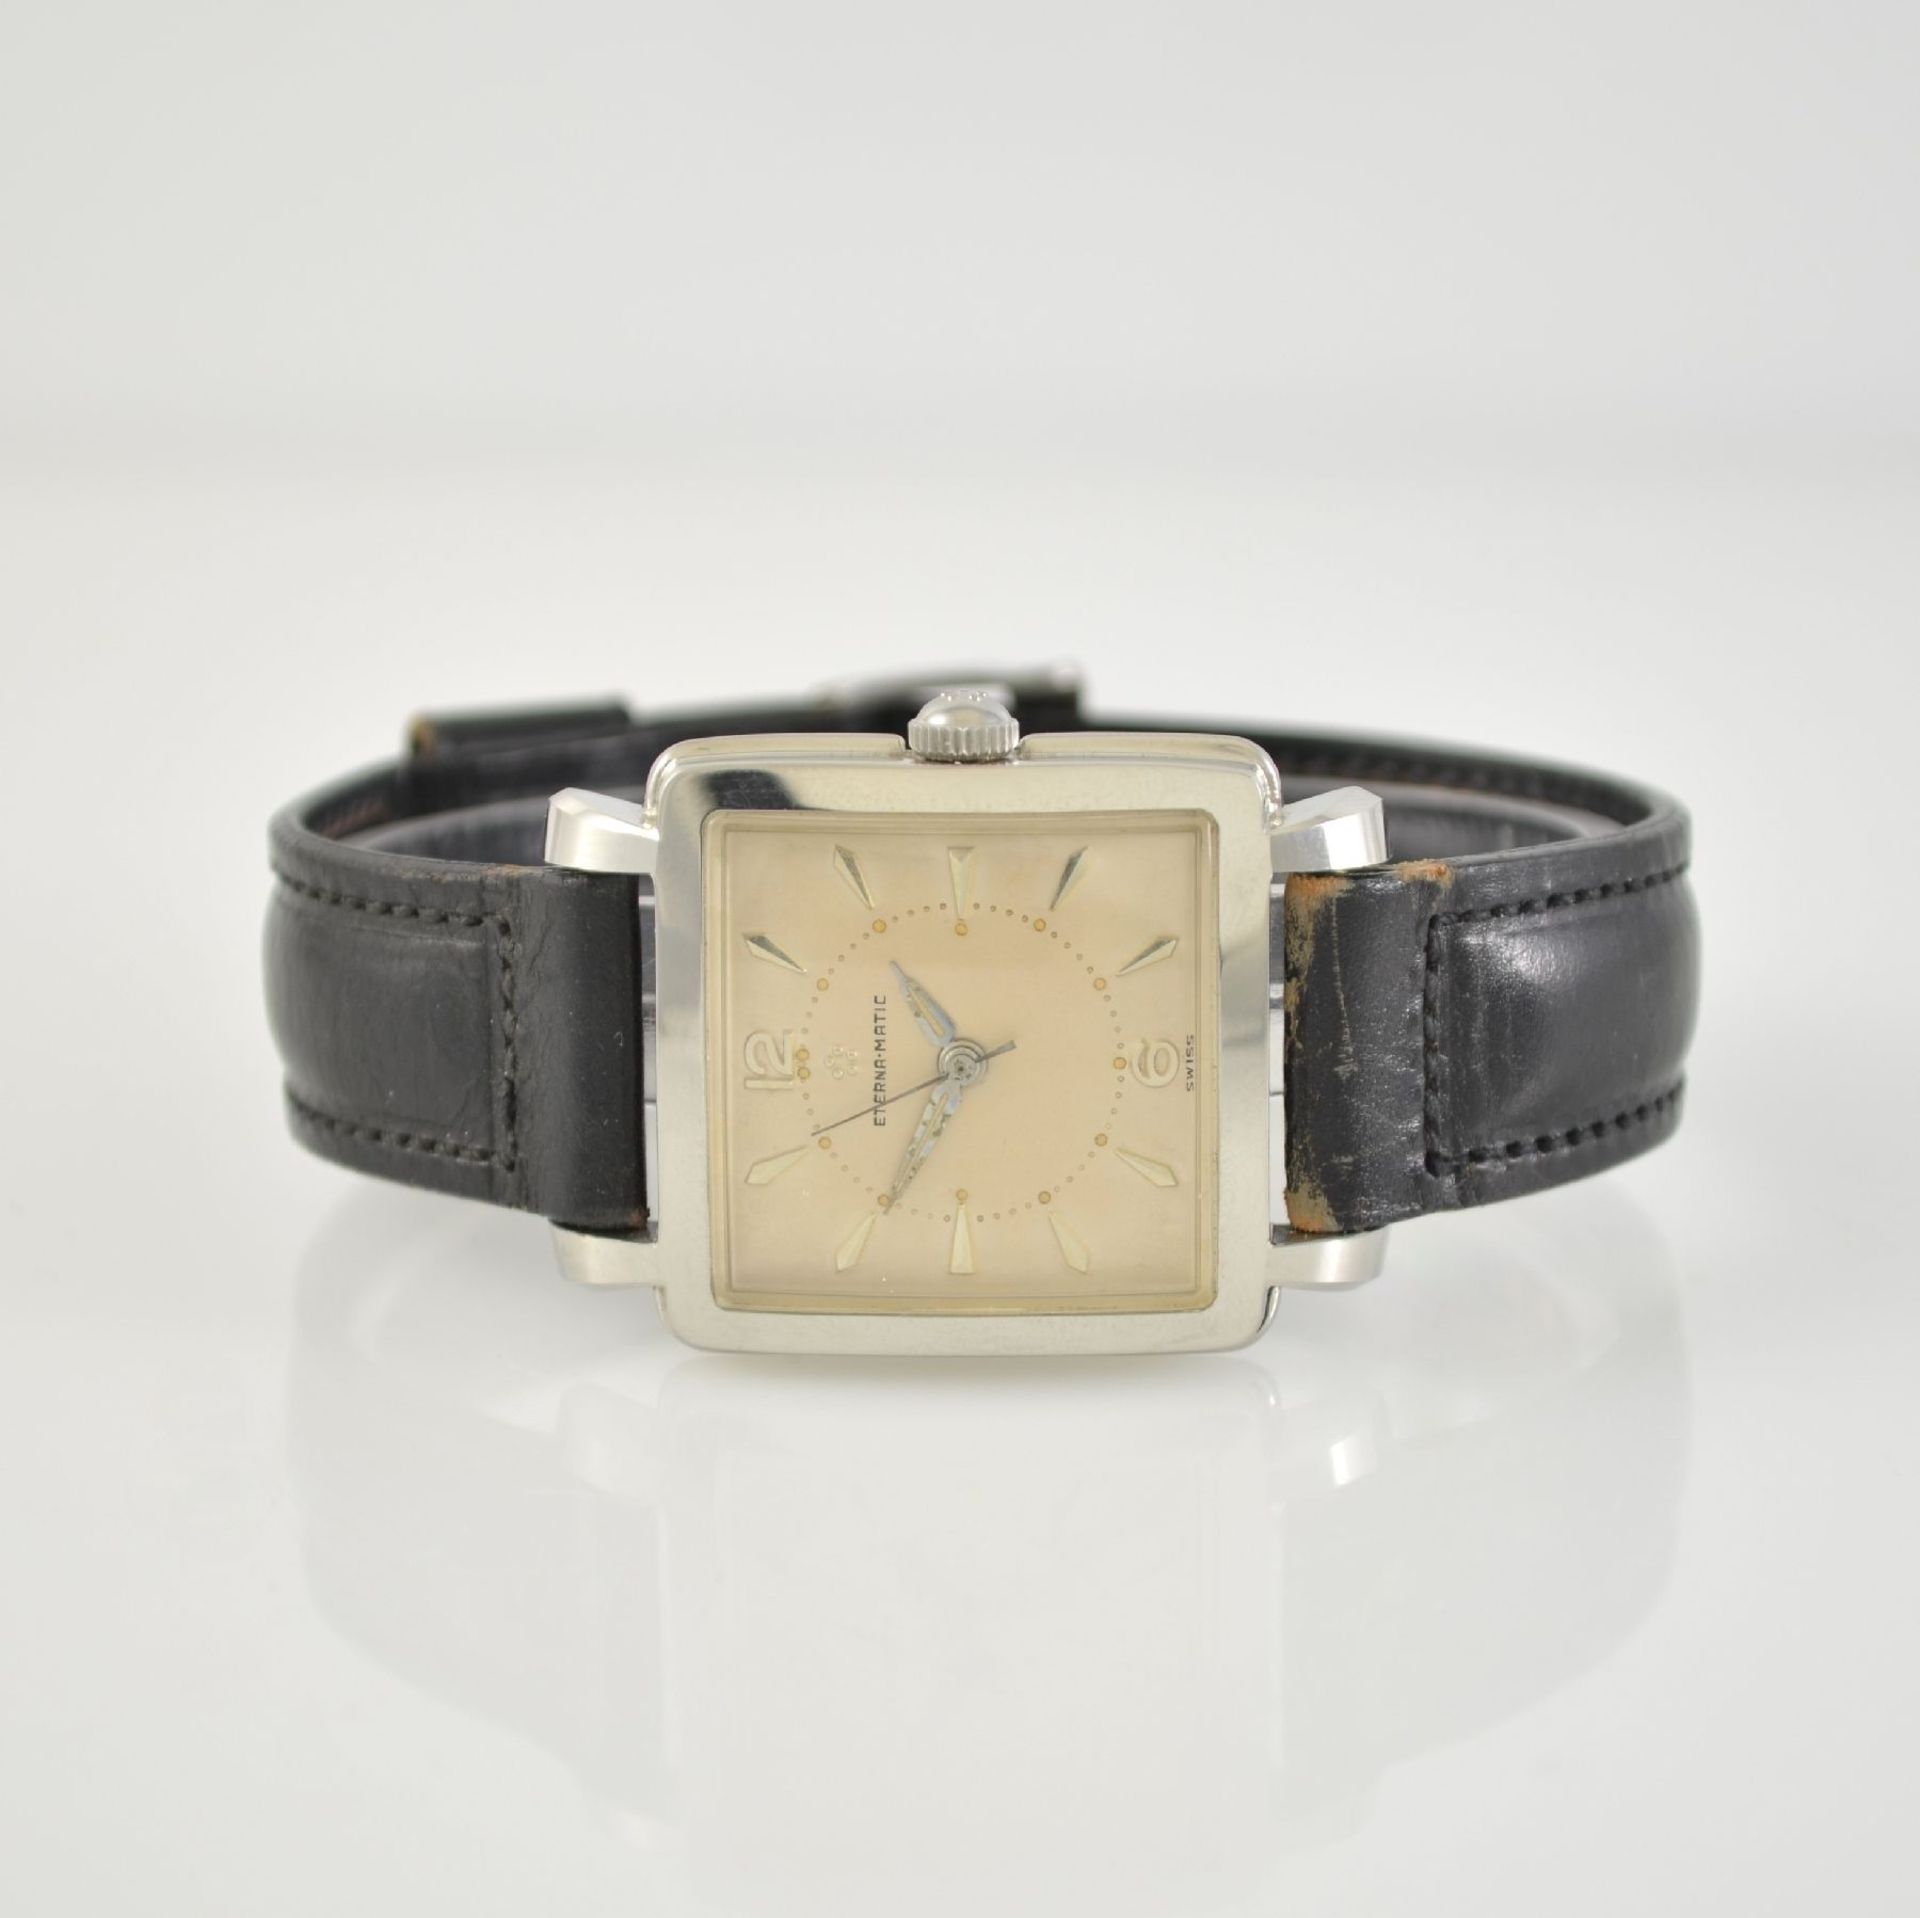 ETERNA-MATIC rare square stainless steel gents wristwatch with box & hangtag, Switzerland around